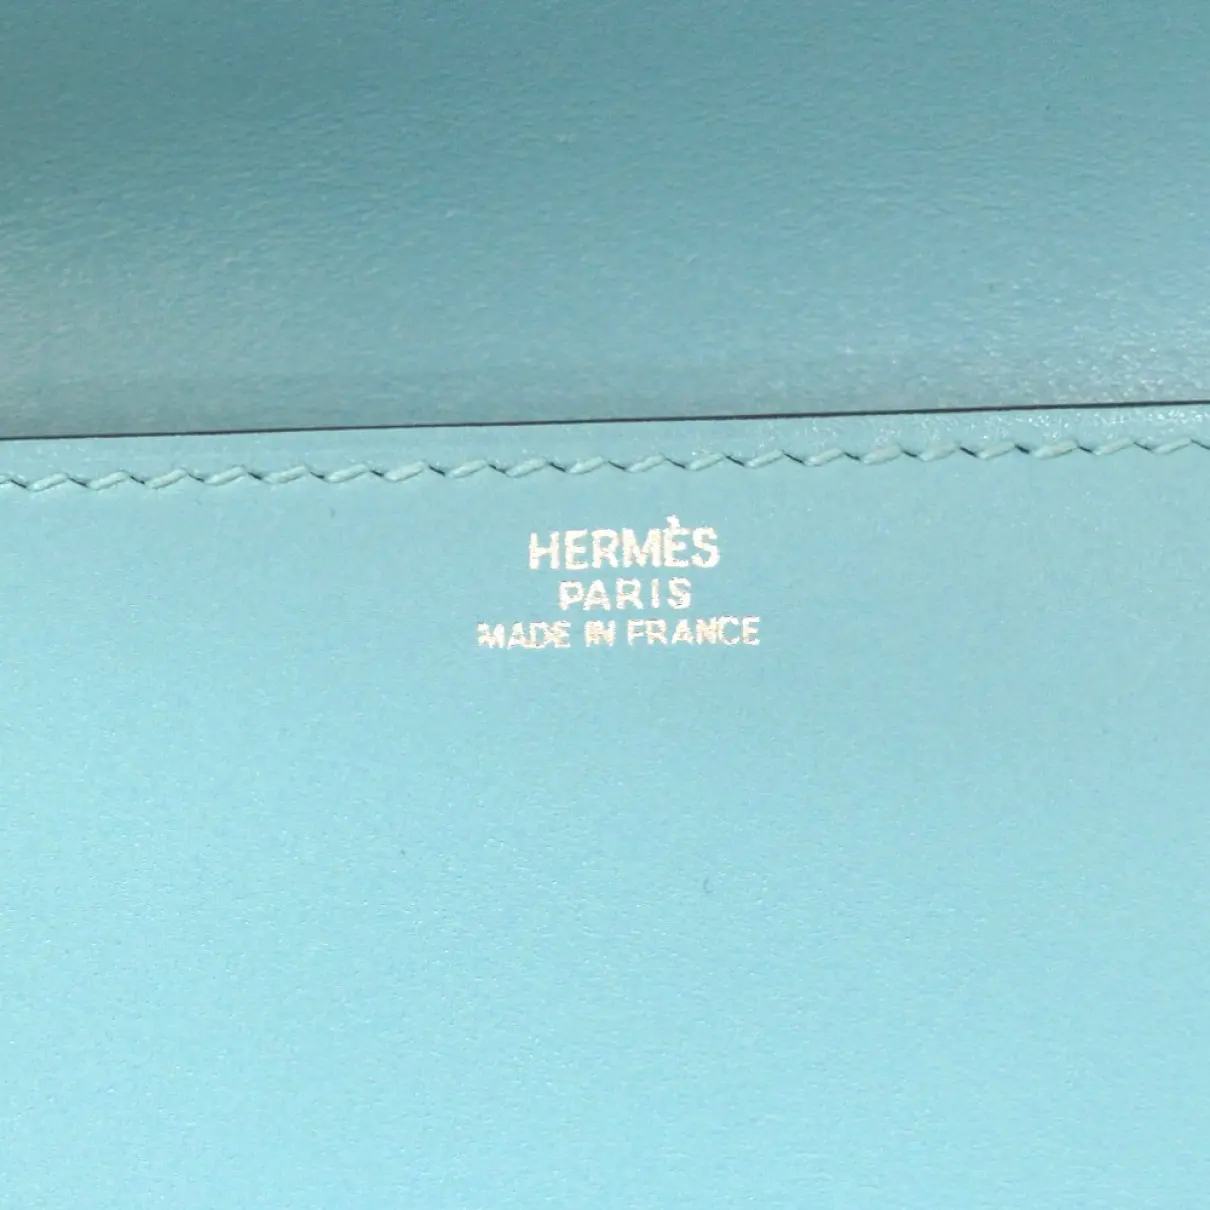 Leather clutch bag Hermès